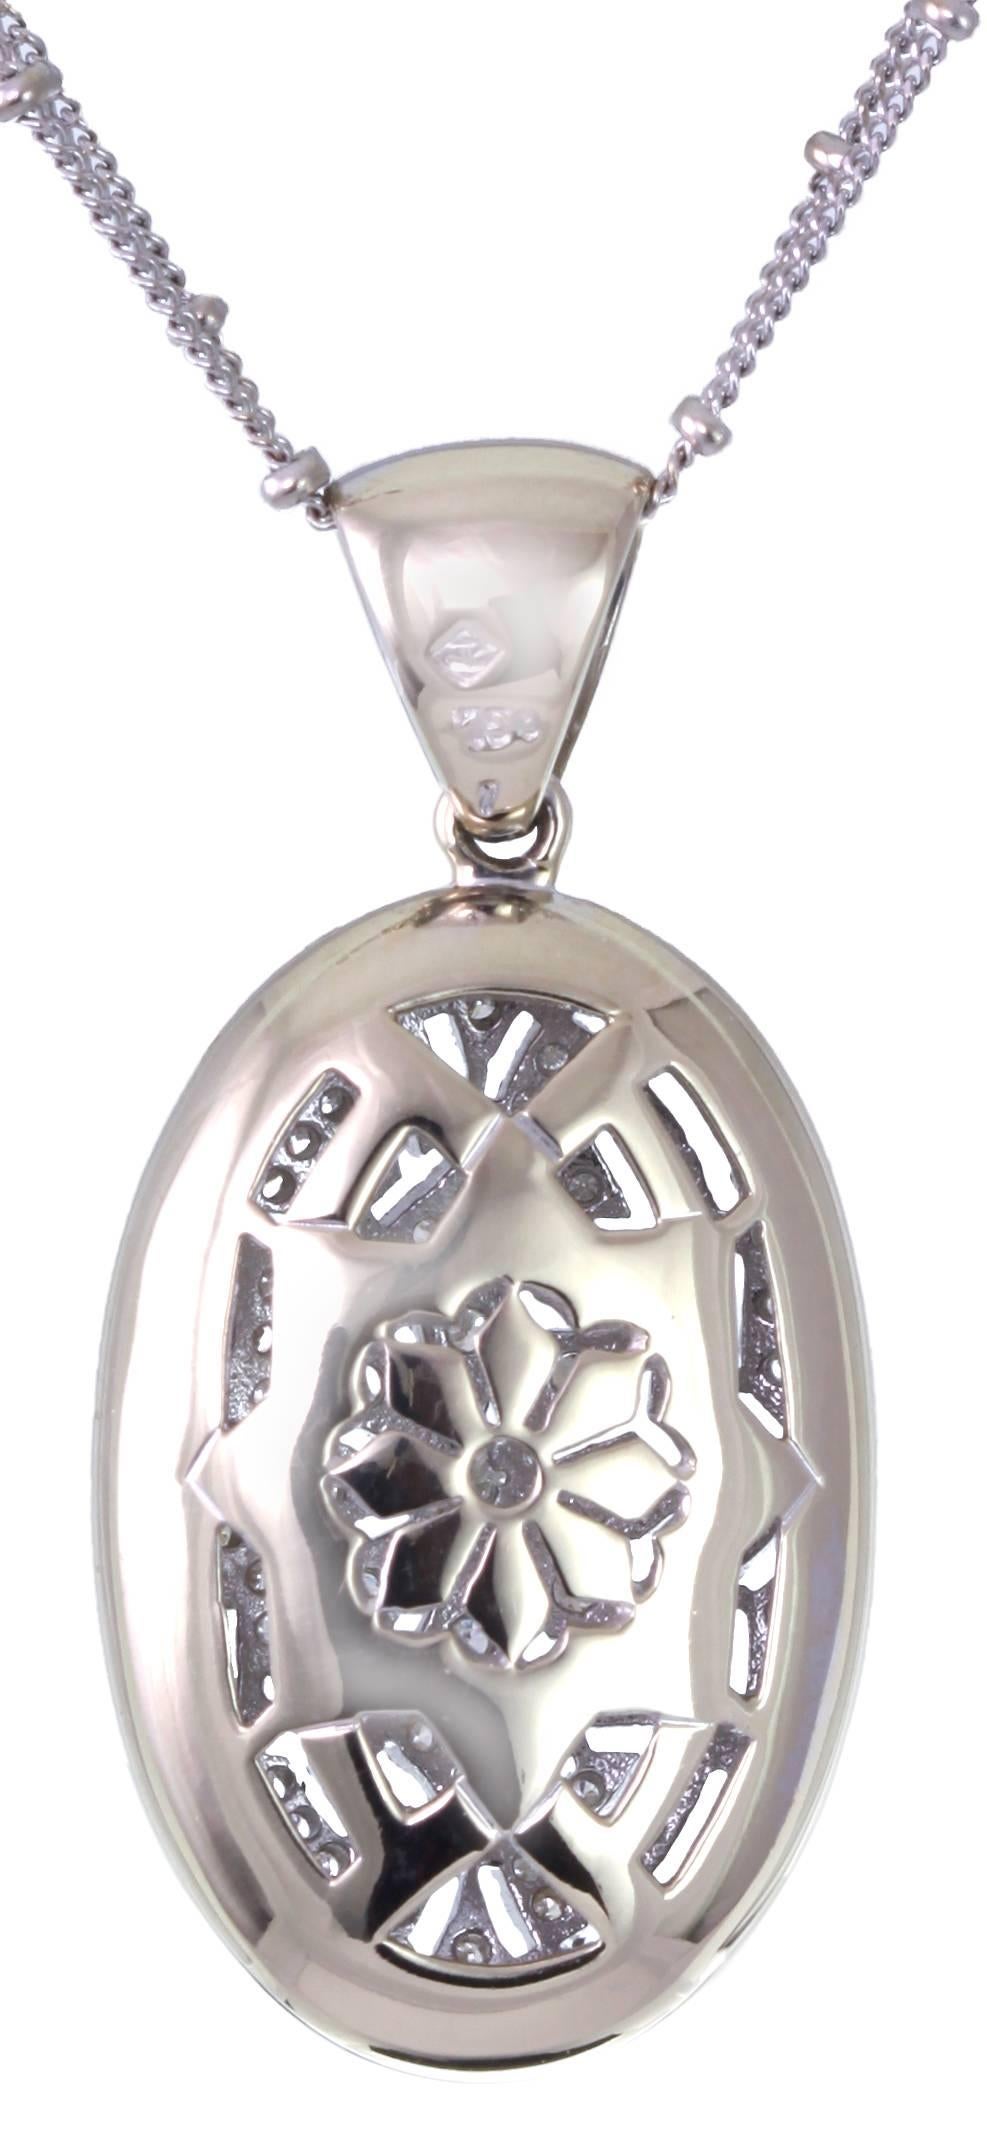 Beautiful oval shape diamond pendant with 20